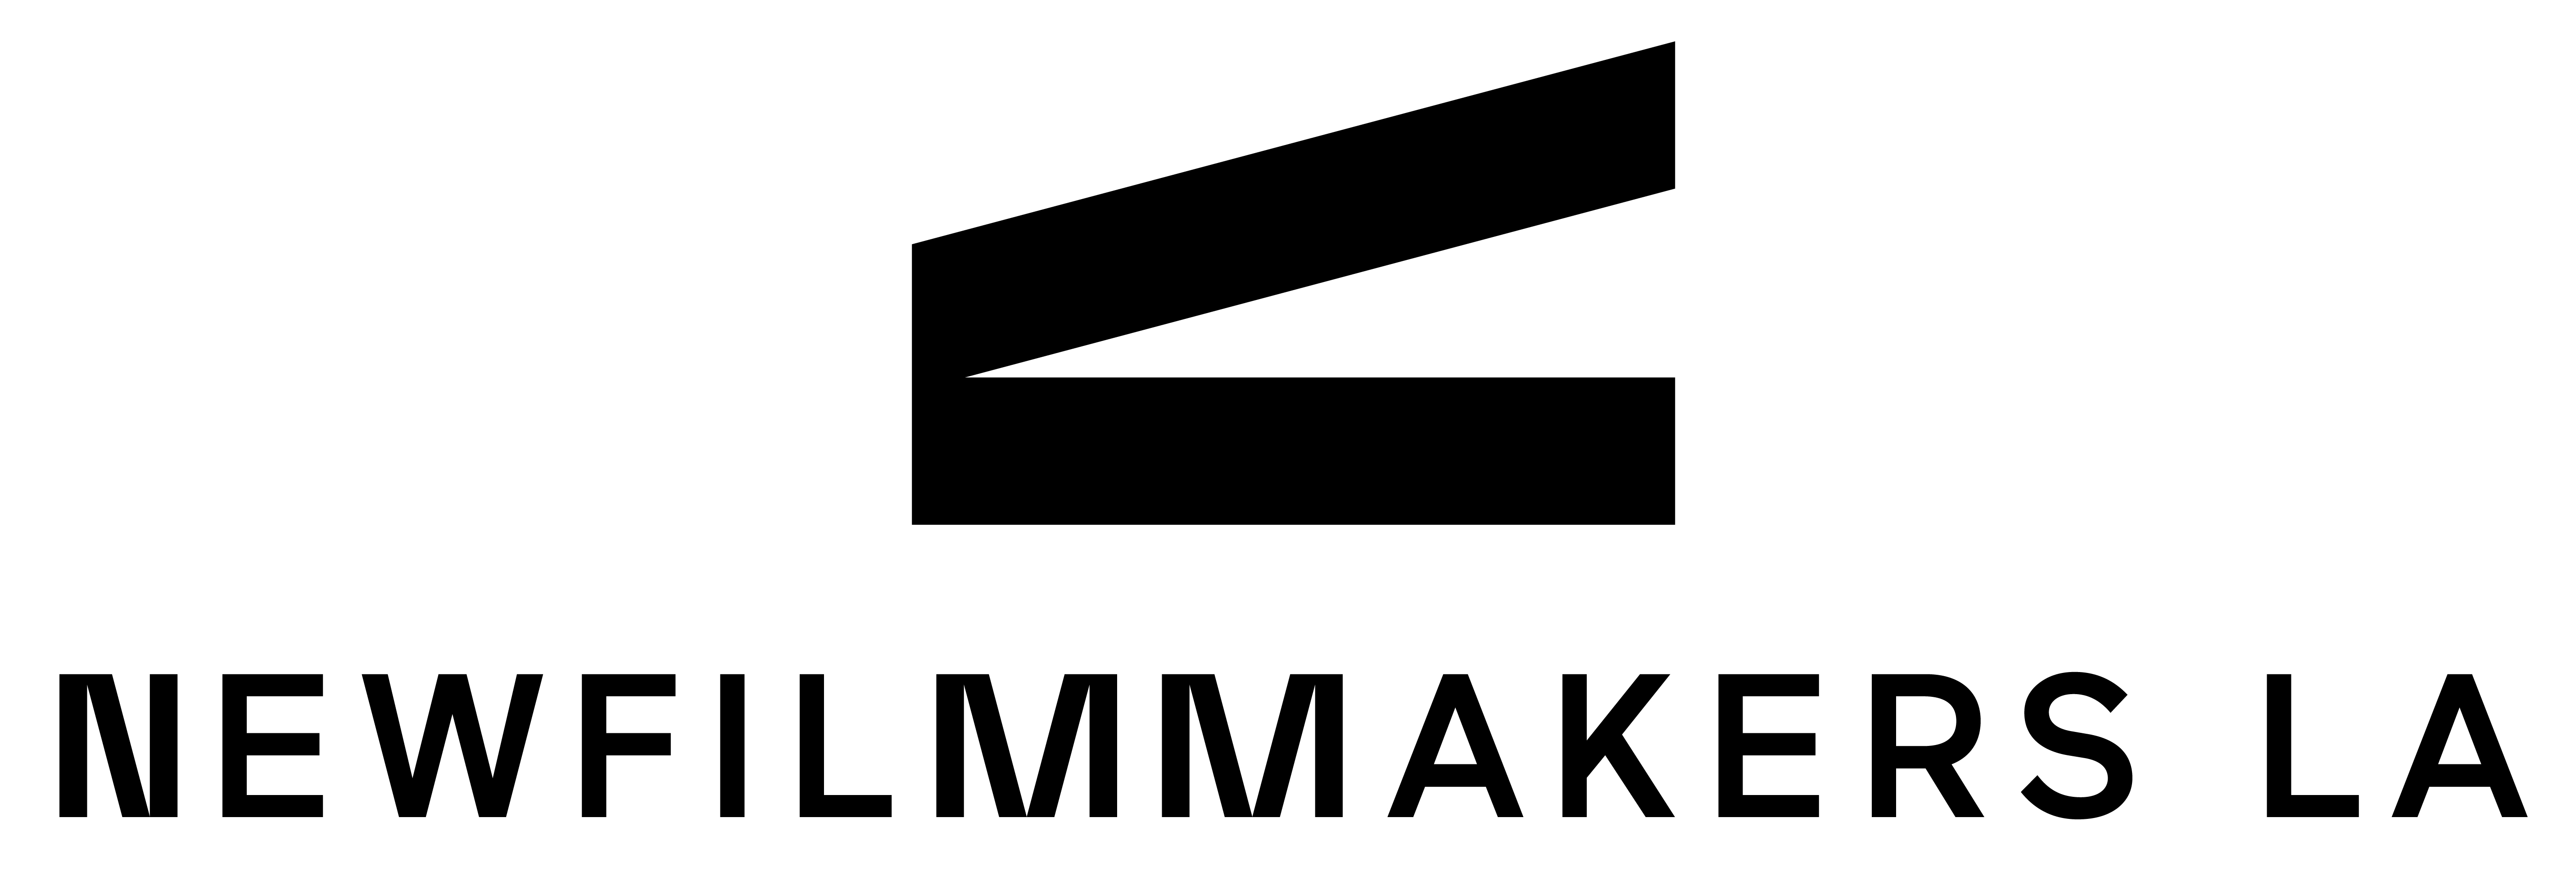 NewFilmmakers Los Angeles (NFMLA)